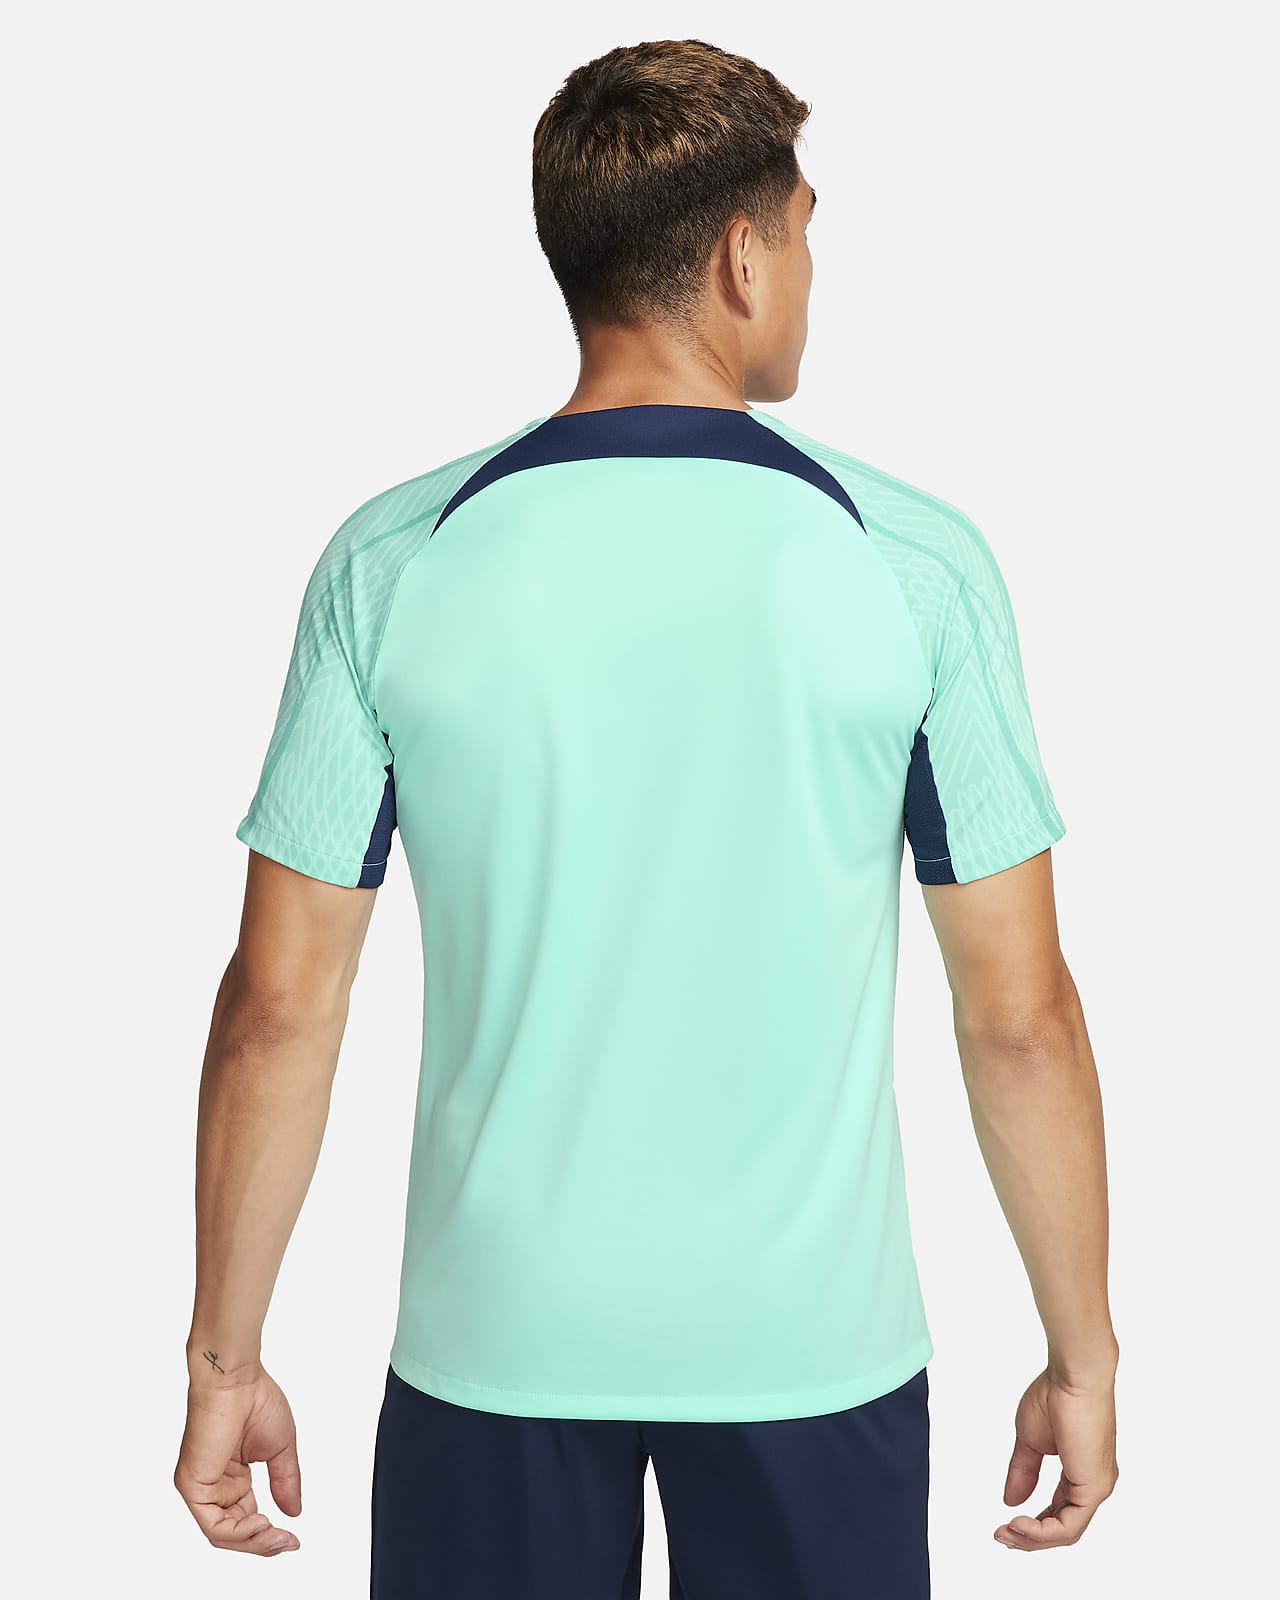 Fly Emirates Mens Short Sleeve Soccer Football Jersey Sports Tee T-Shirt  Blue S